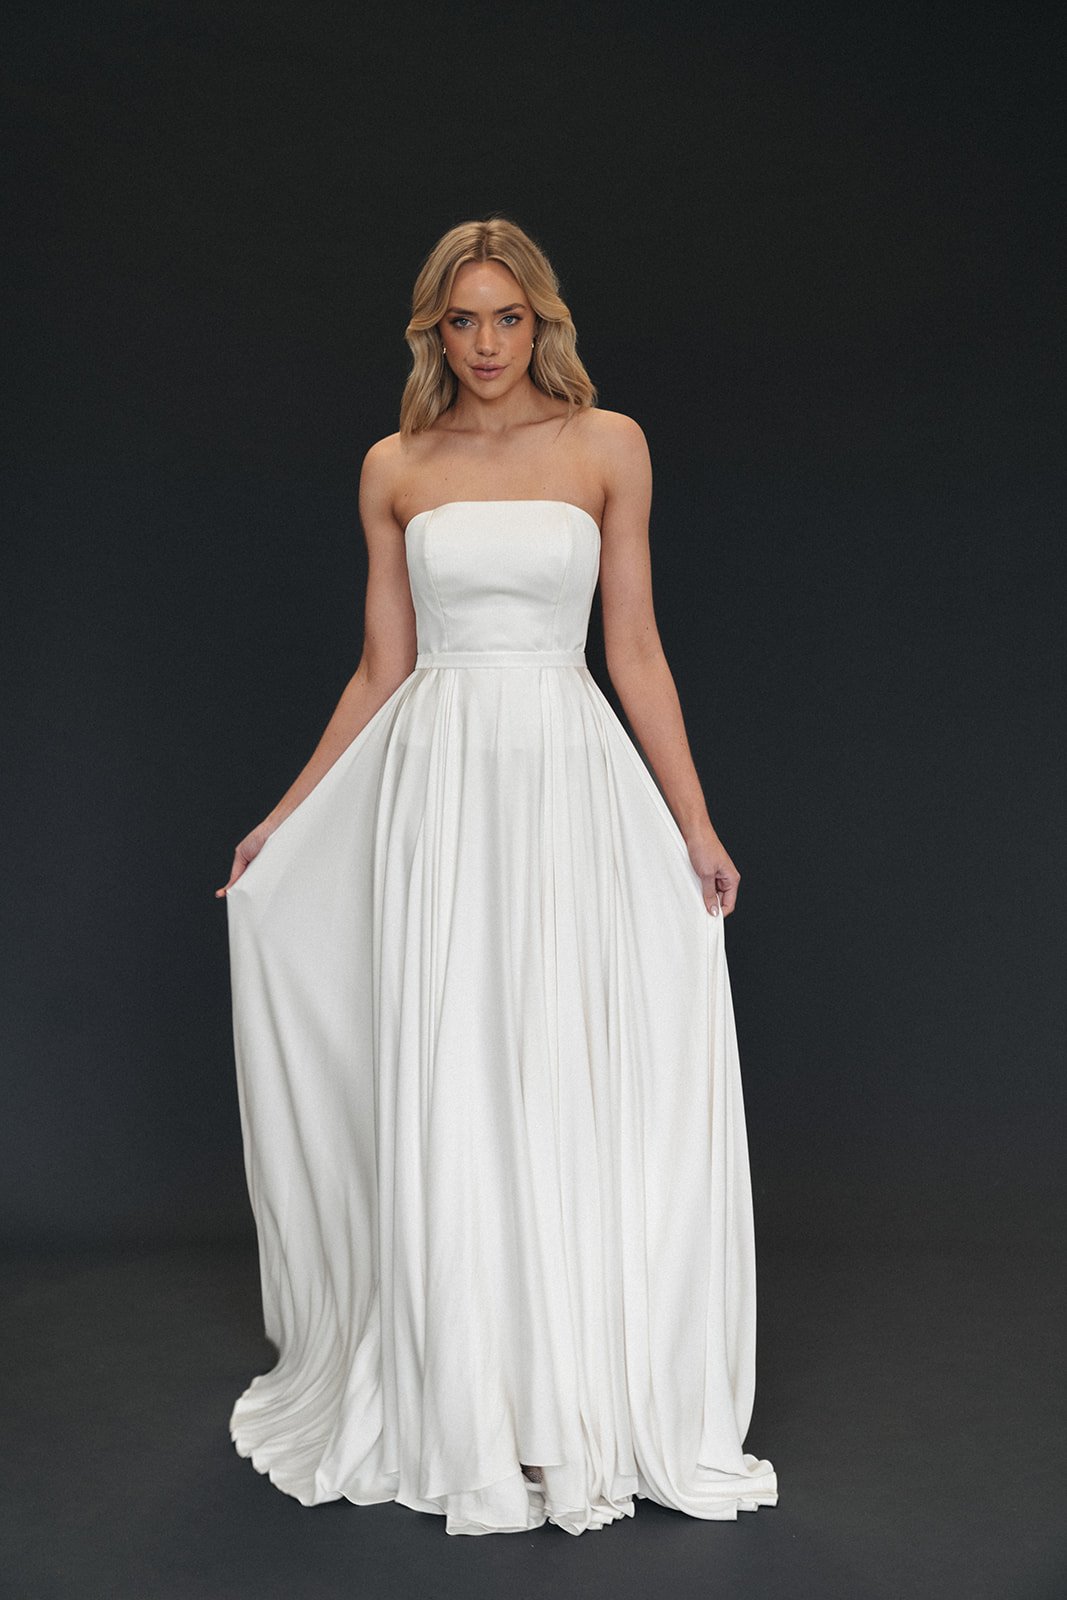 Moira Hughes the Dubln Wedding Dress with Flowy Skirt.jpg